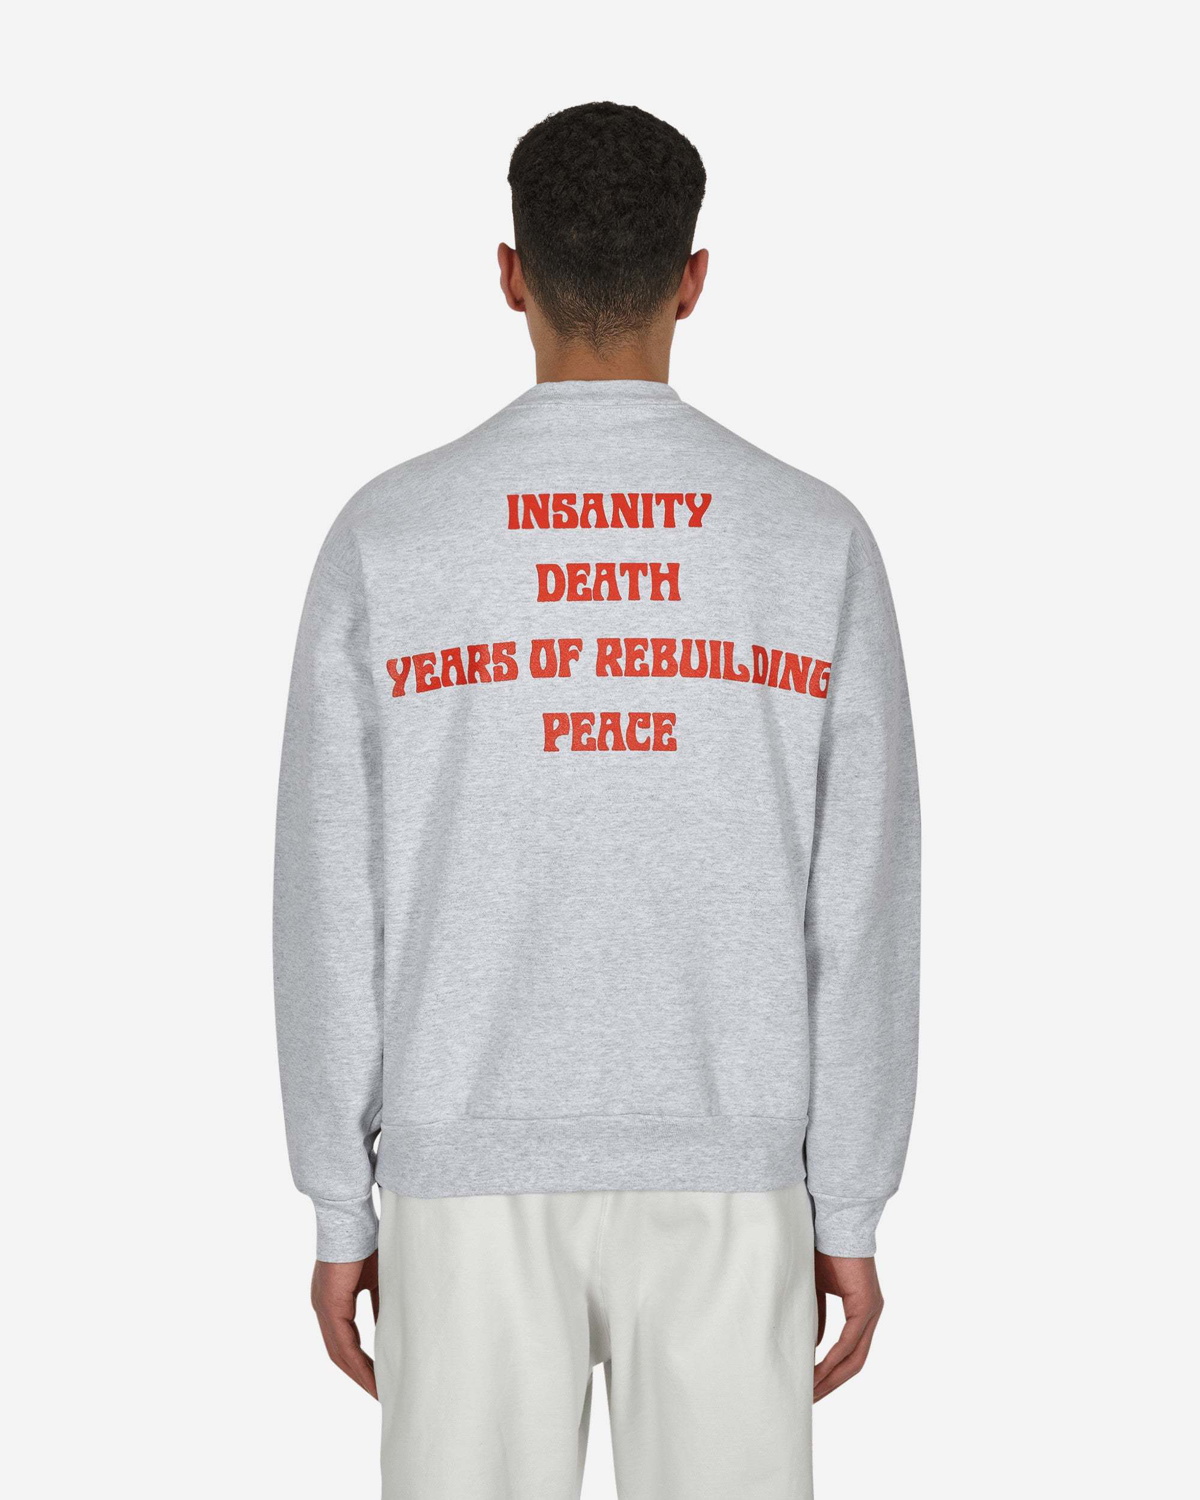 Insanity Death Years Of Rebuilding Peace Crewneck Sweatshirt